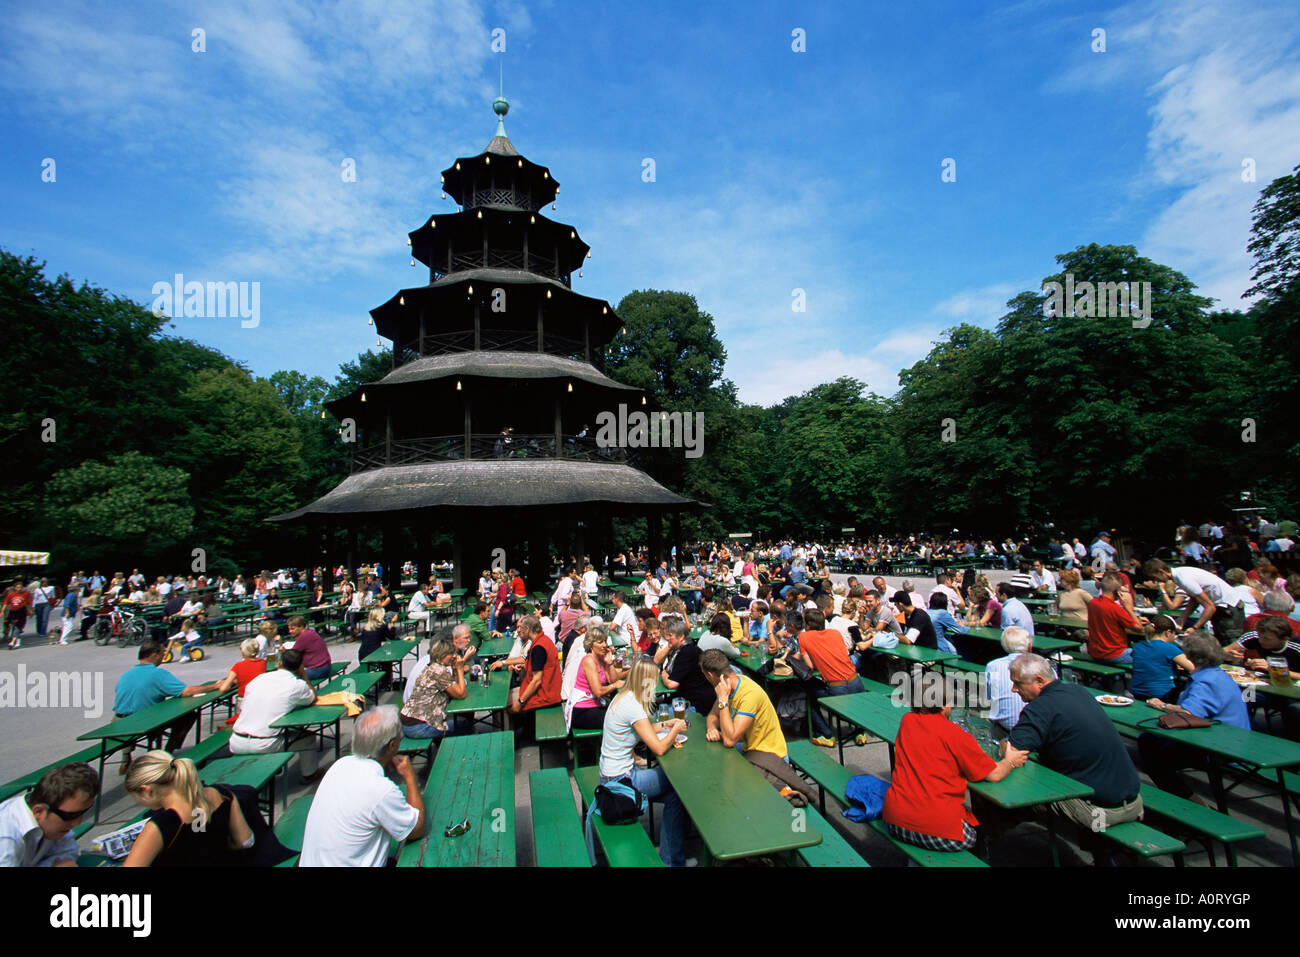 People sitting at the Chinese Tower beer garden in the Englischer Garten Munich Bavaria Germany Europe Stock Photo